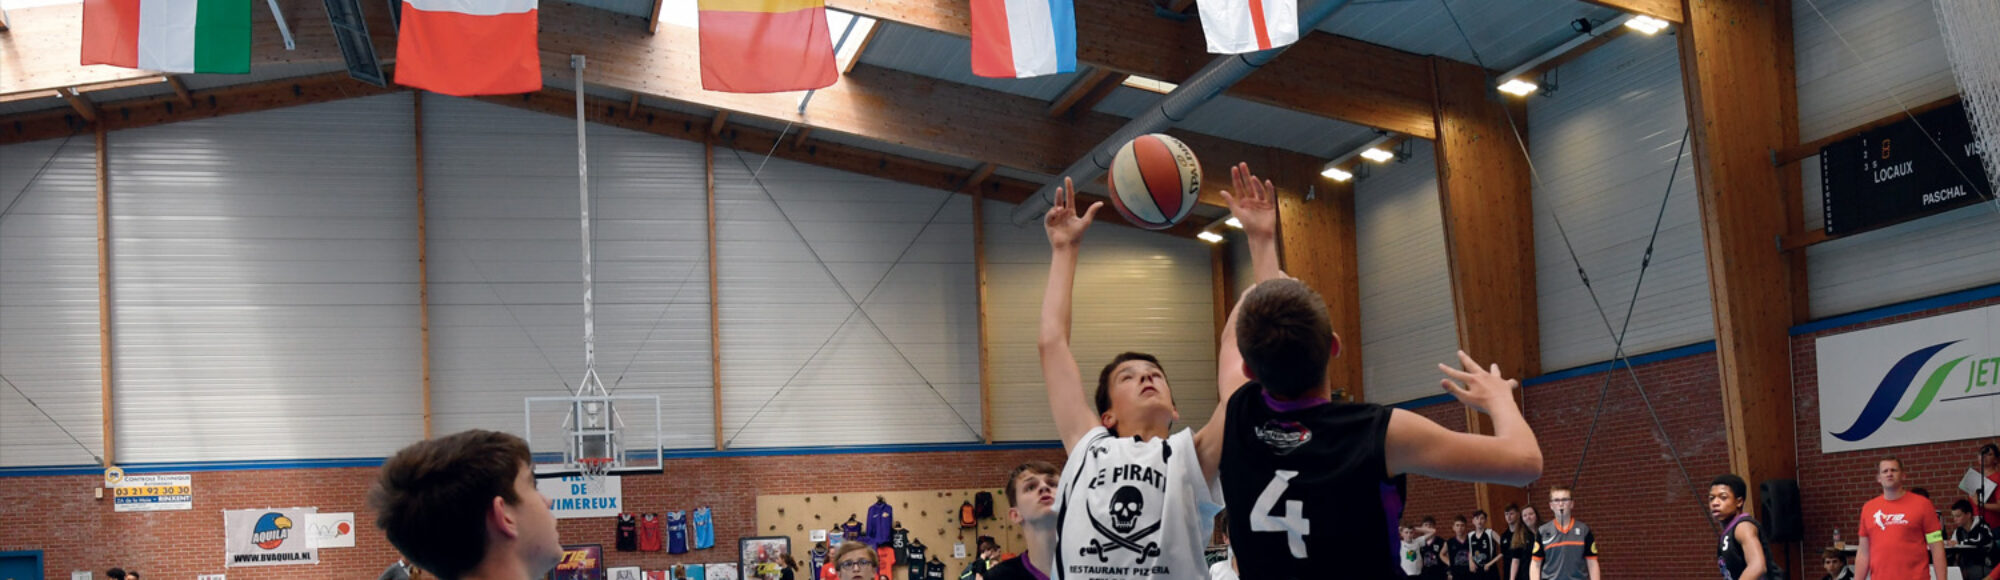 europale basket club wimille wimereux_Wimille1500_300dpi